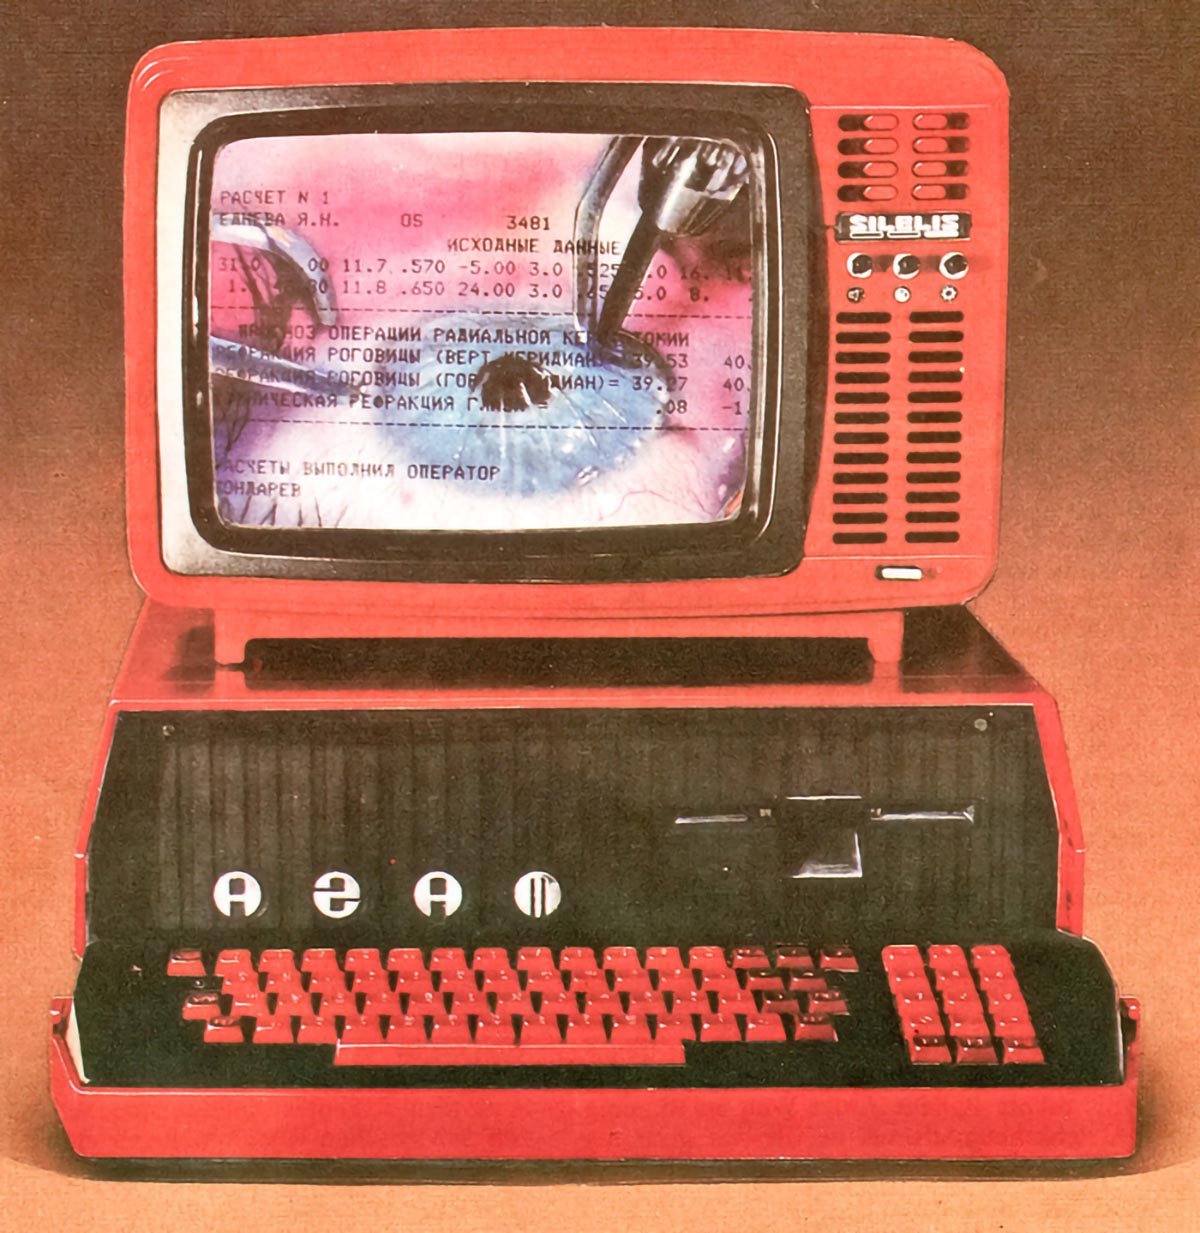 Компьютер агат год массового выпуска. Агат-4 компьютер. ПЭВМ агат. Агат2 компьютер СССР. Агат 8 компьютер.